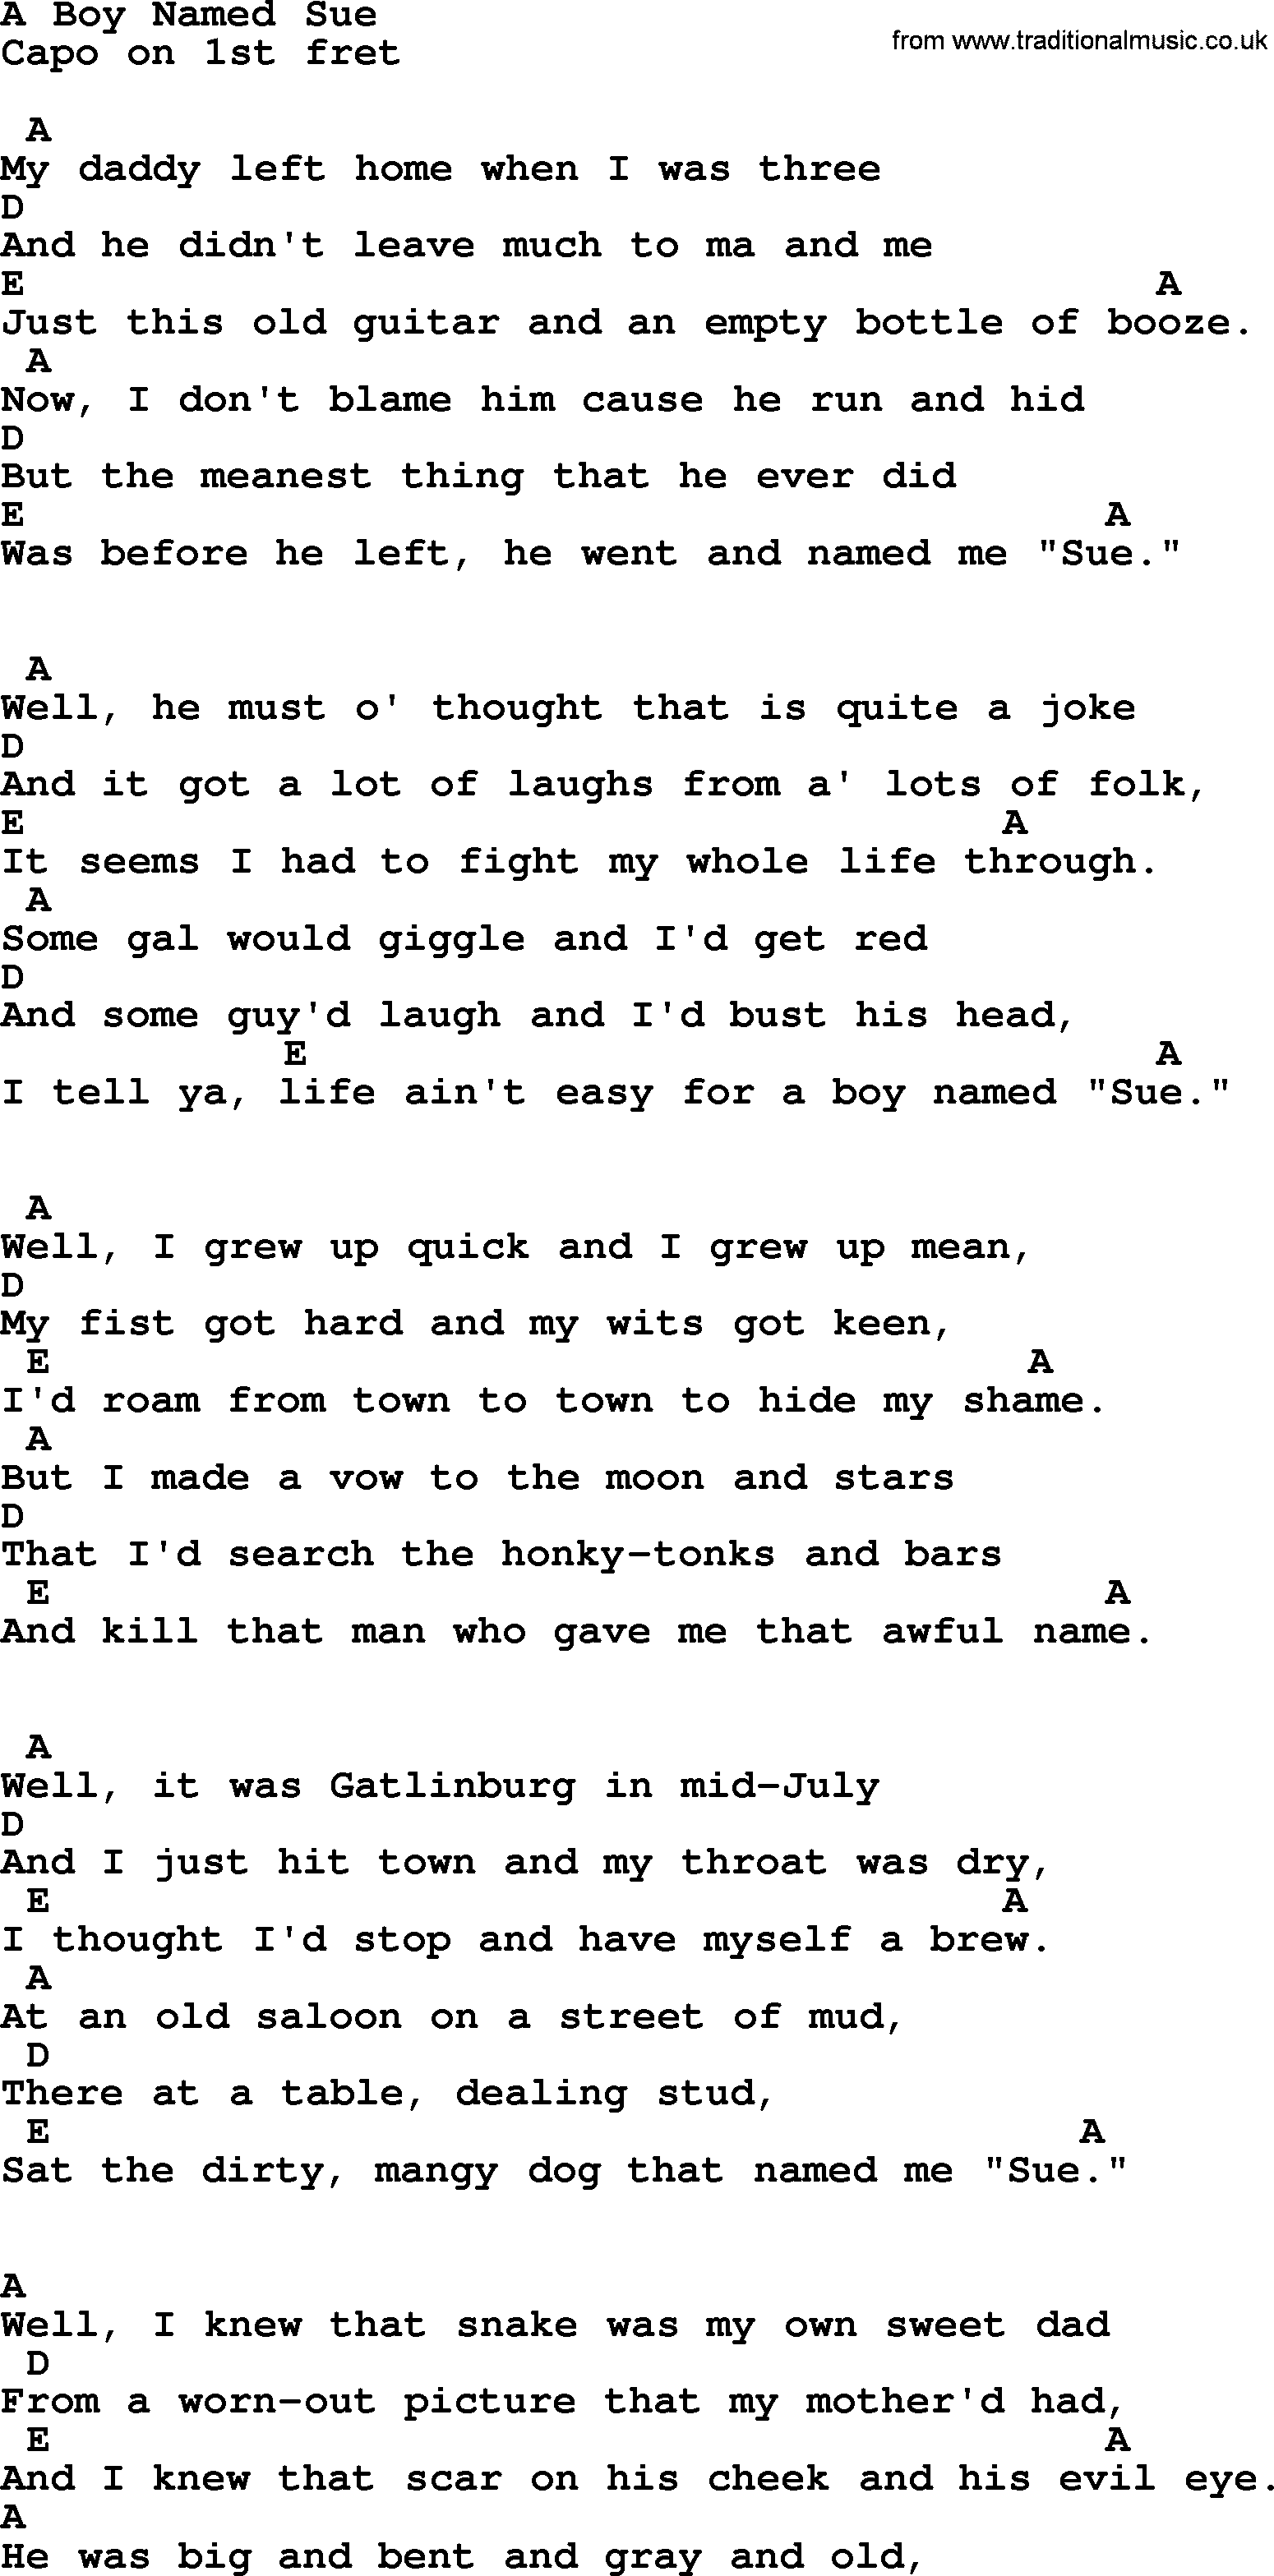 Johnny Cash song A Boy Named Sue, lyrics and chords